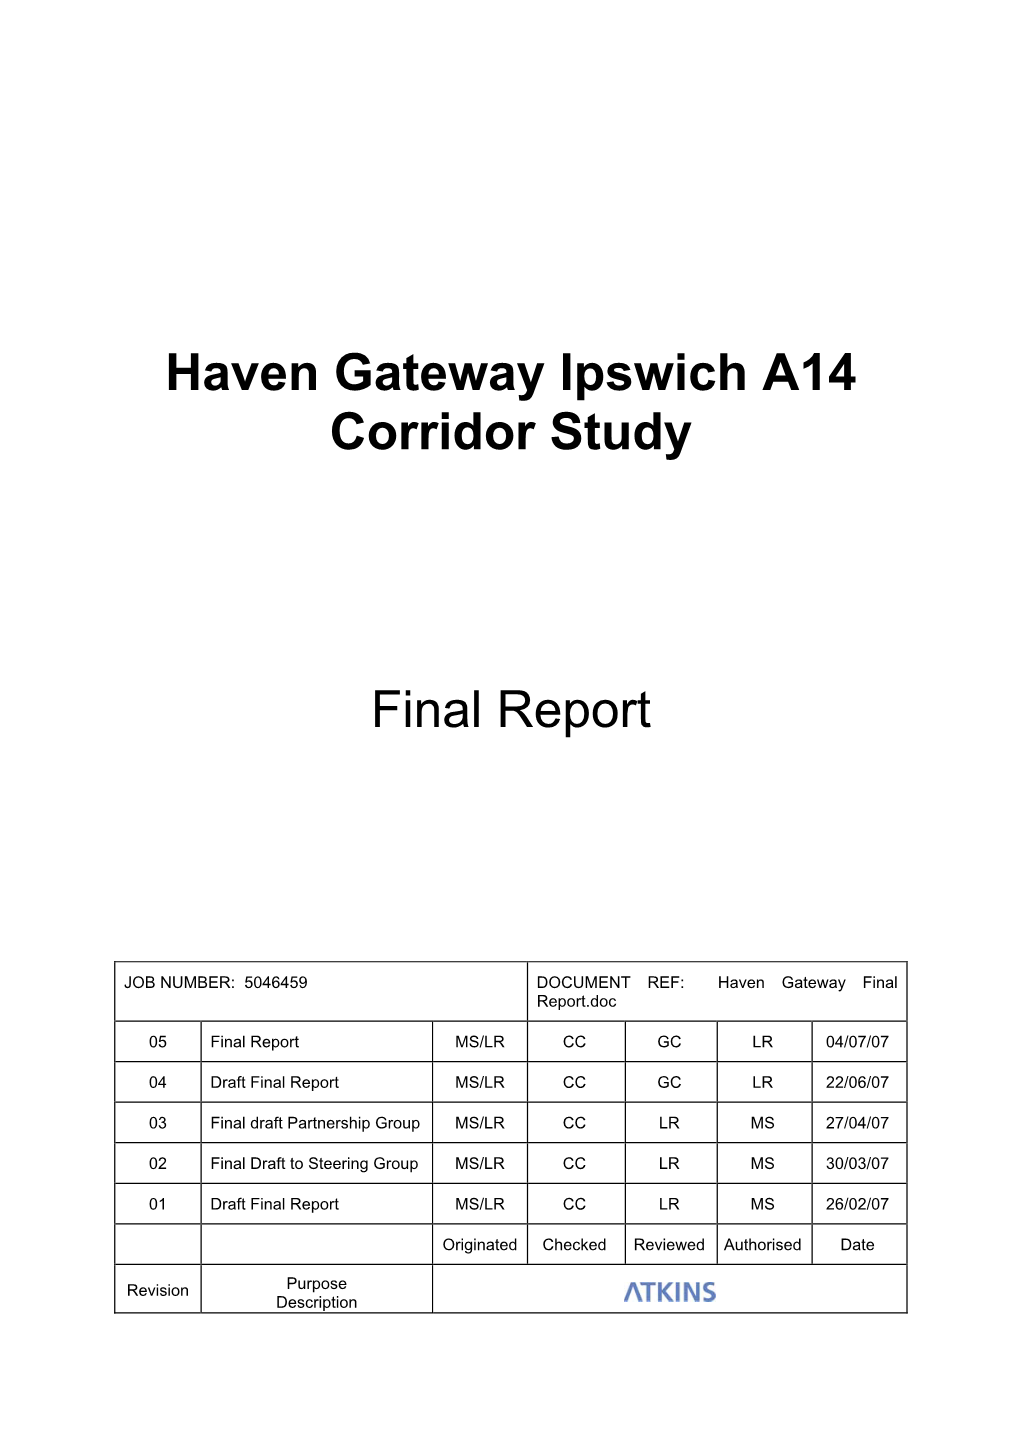 Haven Gateway Ipswich A14 Corridor Study